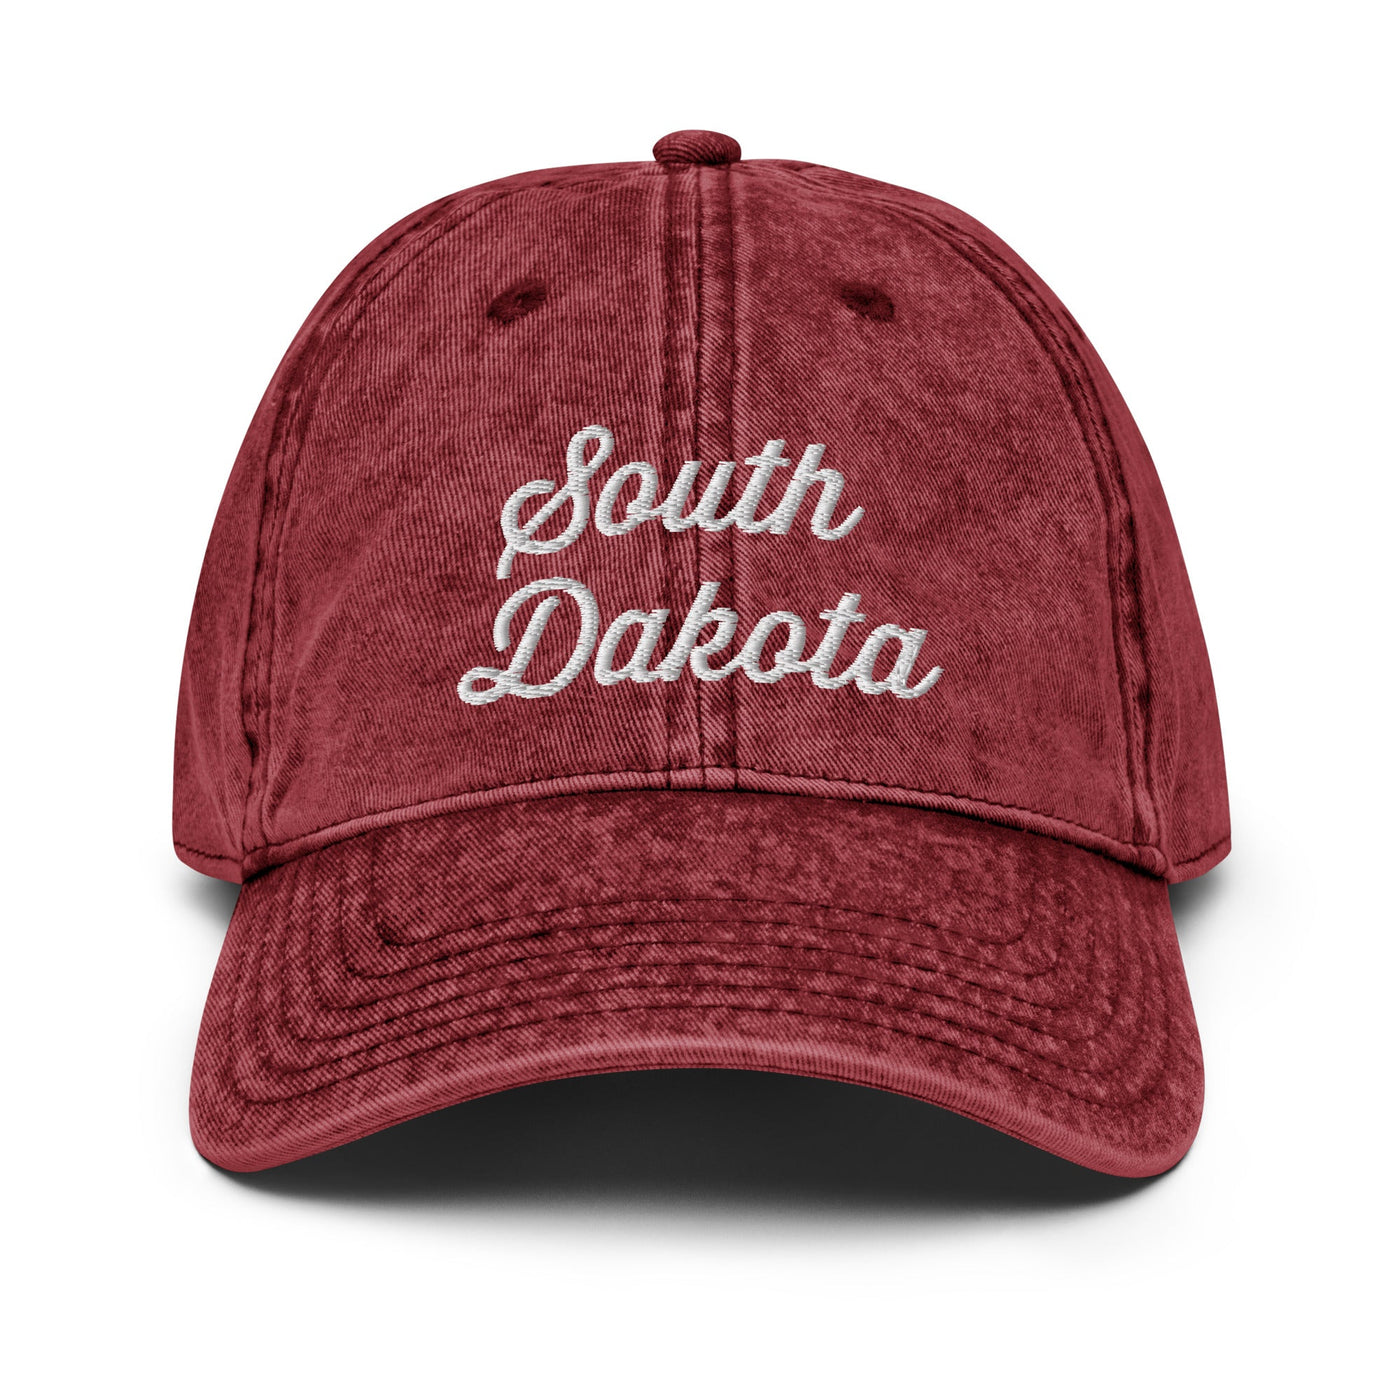 South Dakota Hat - Ezra's Clothing